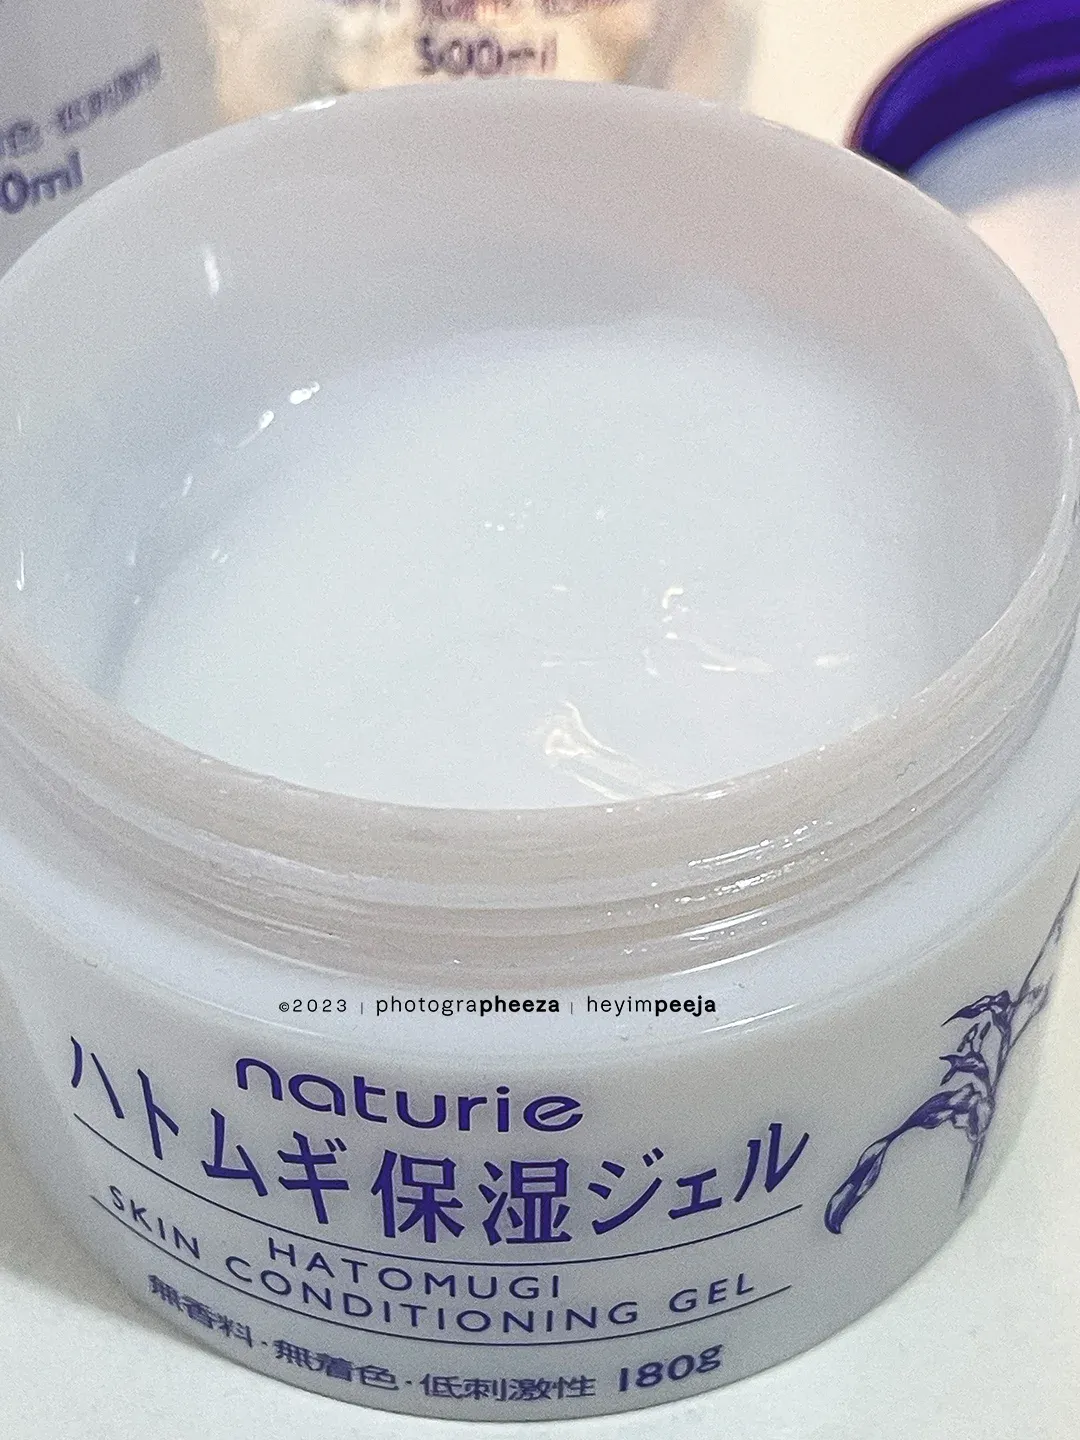 Naturie Hatomugi Skin Conditioning Gel Review